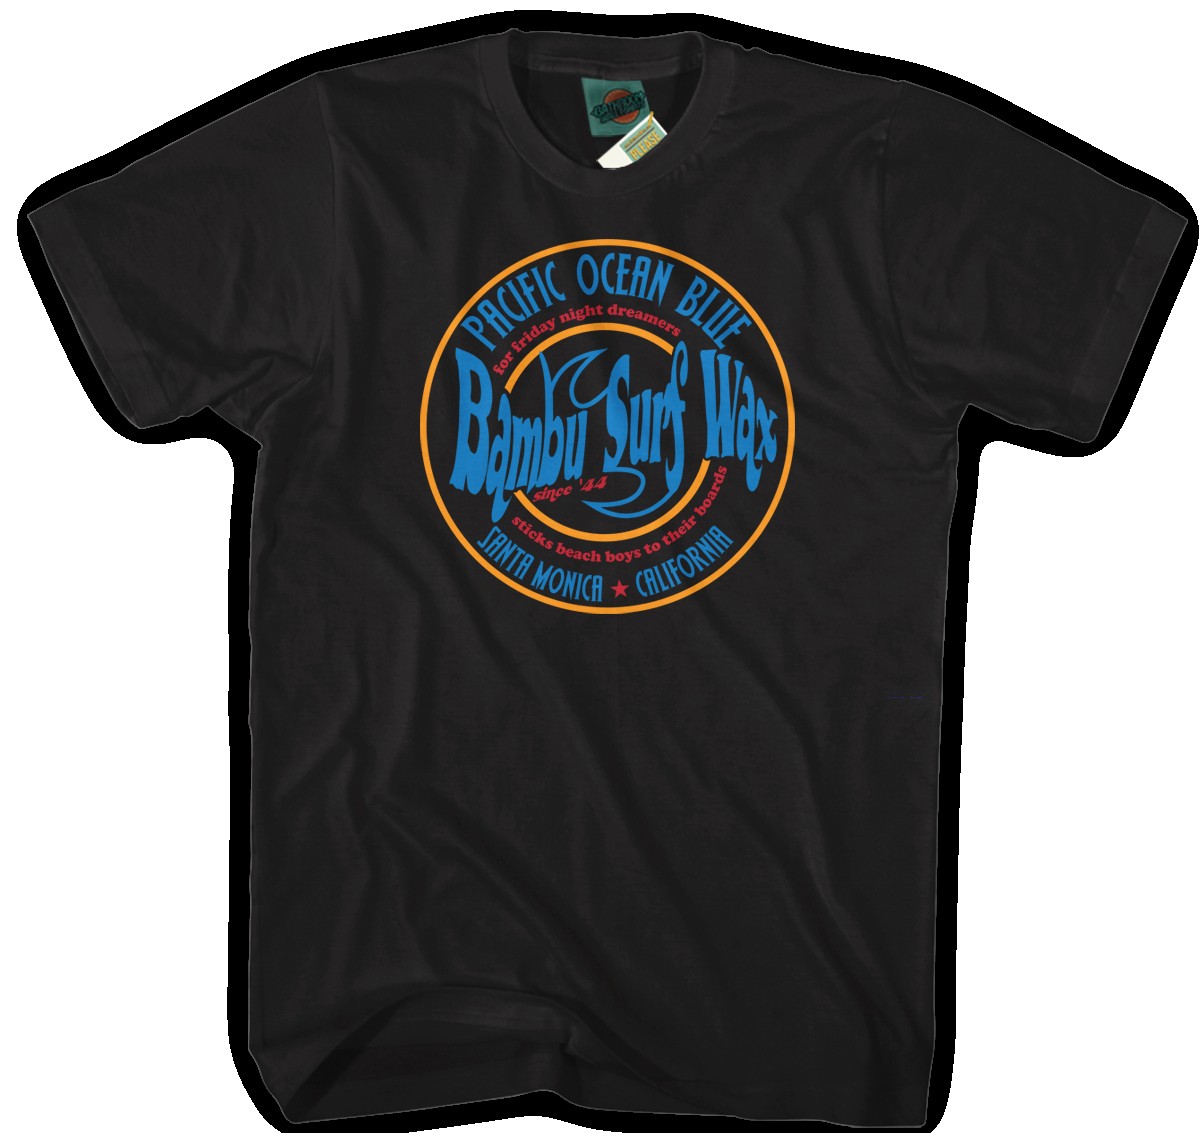 Dennis Wilson PACIFIC OCEAN BLUE Beach Boys inspired, Men's T-Shirt | eBay